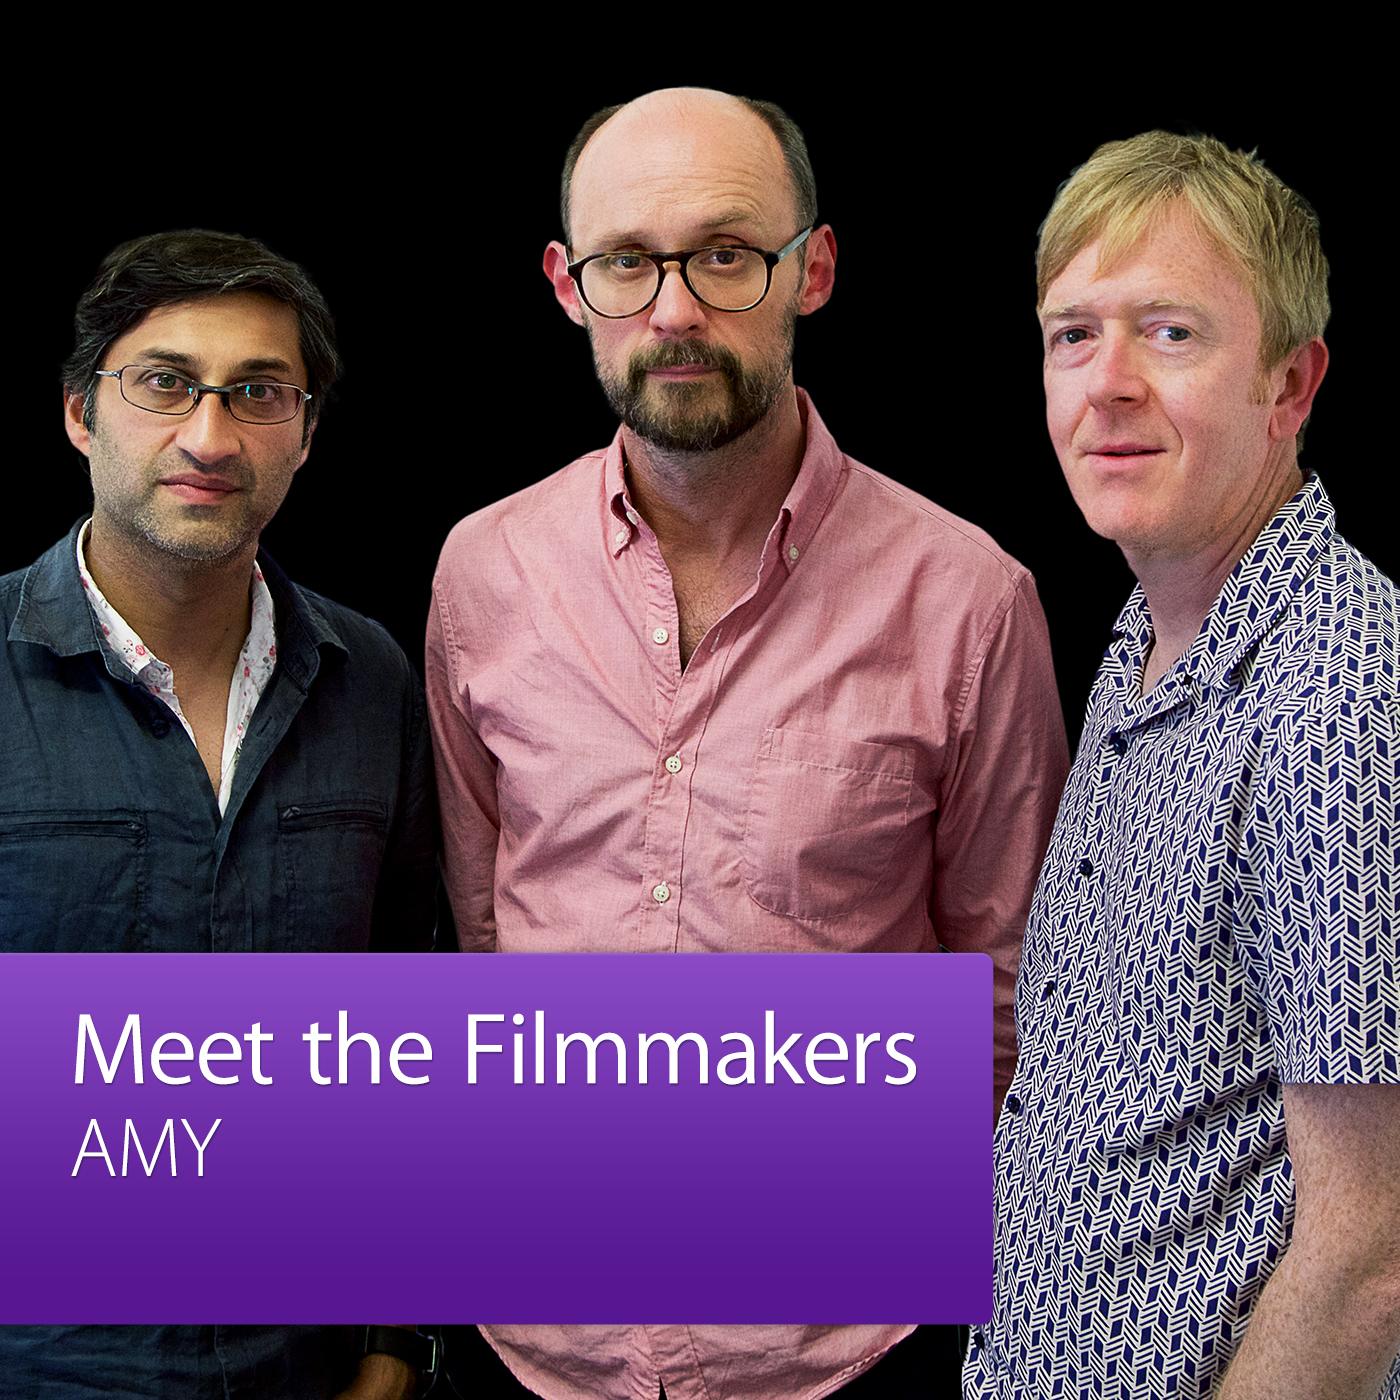 AMY: Meet the Filmmakers